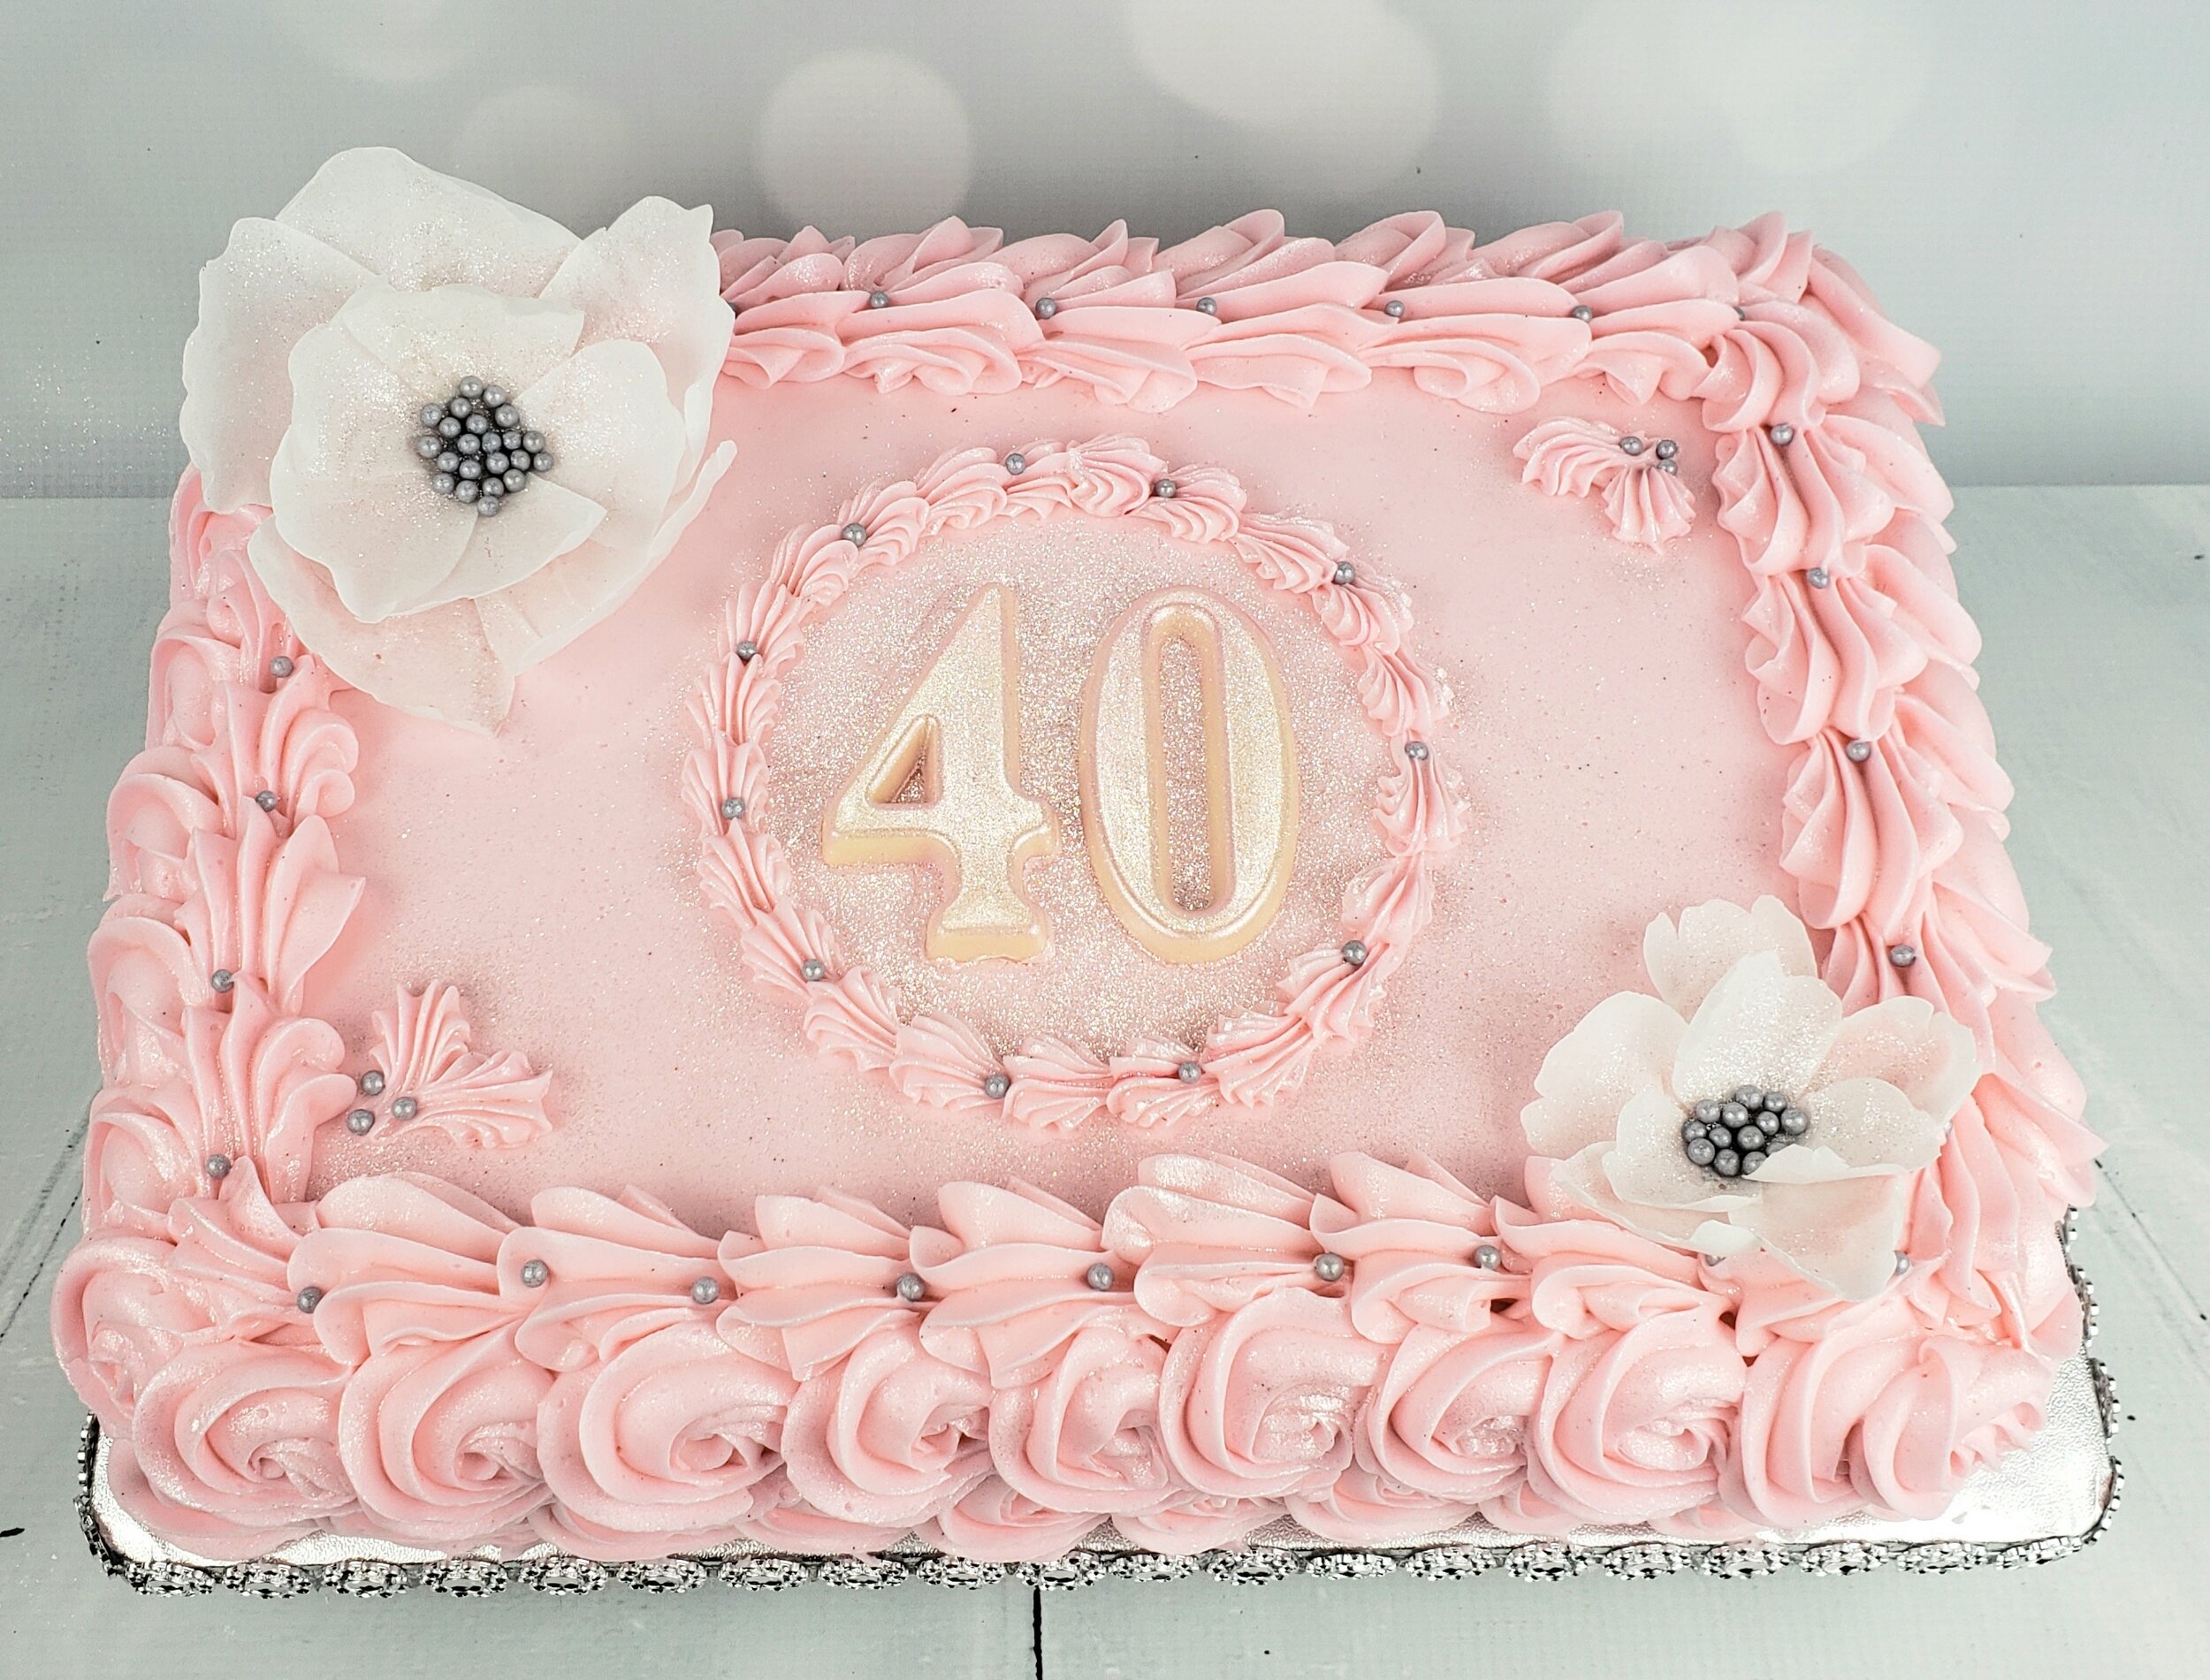 Chicago_Bakery-Pink_Sheet-Cake.jpg